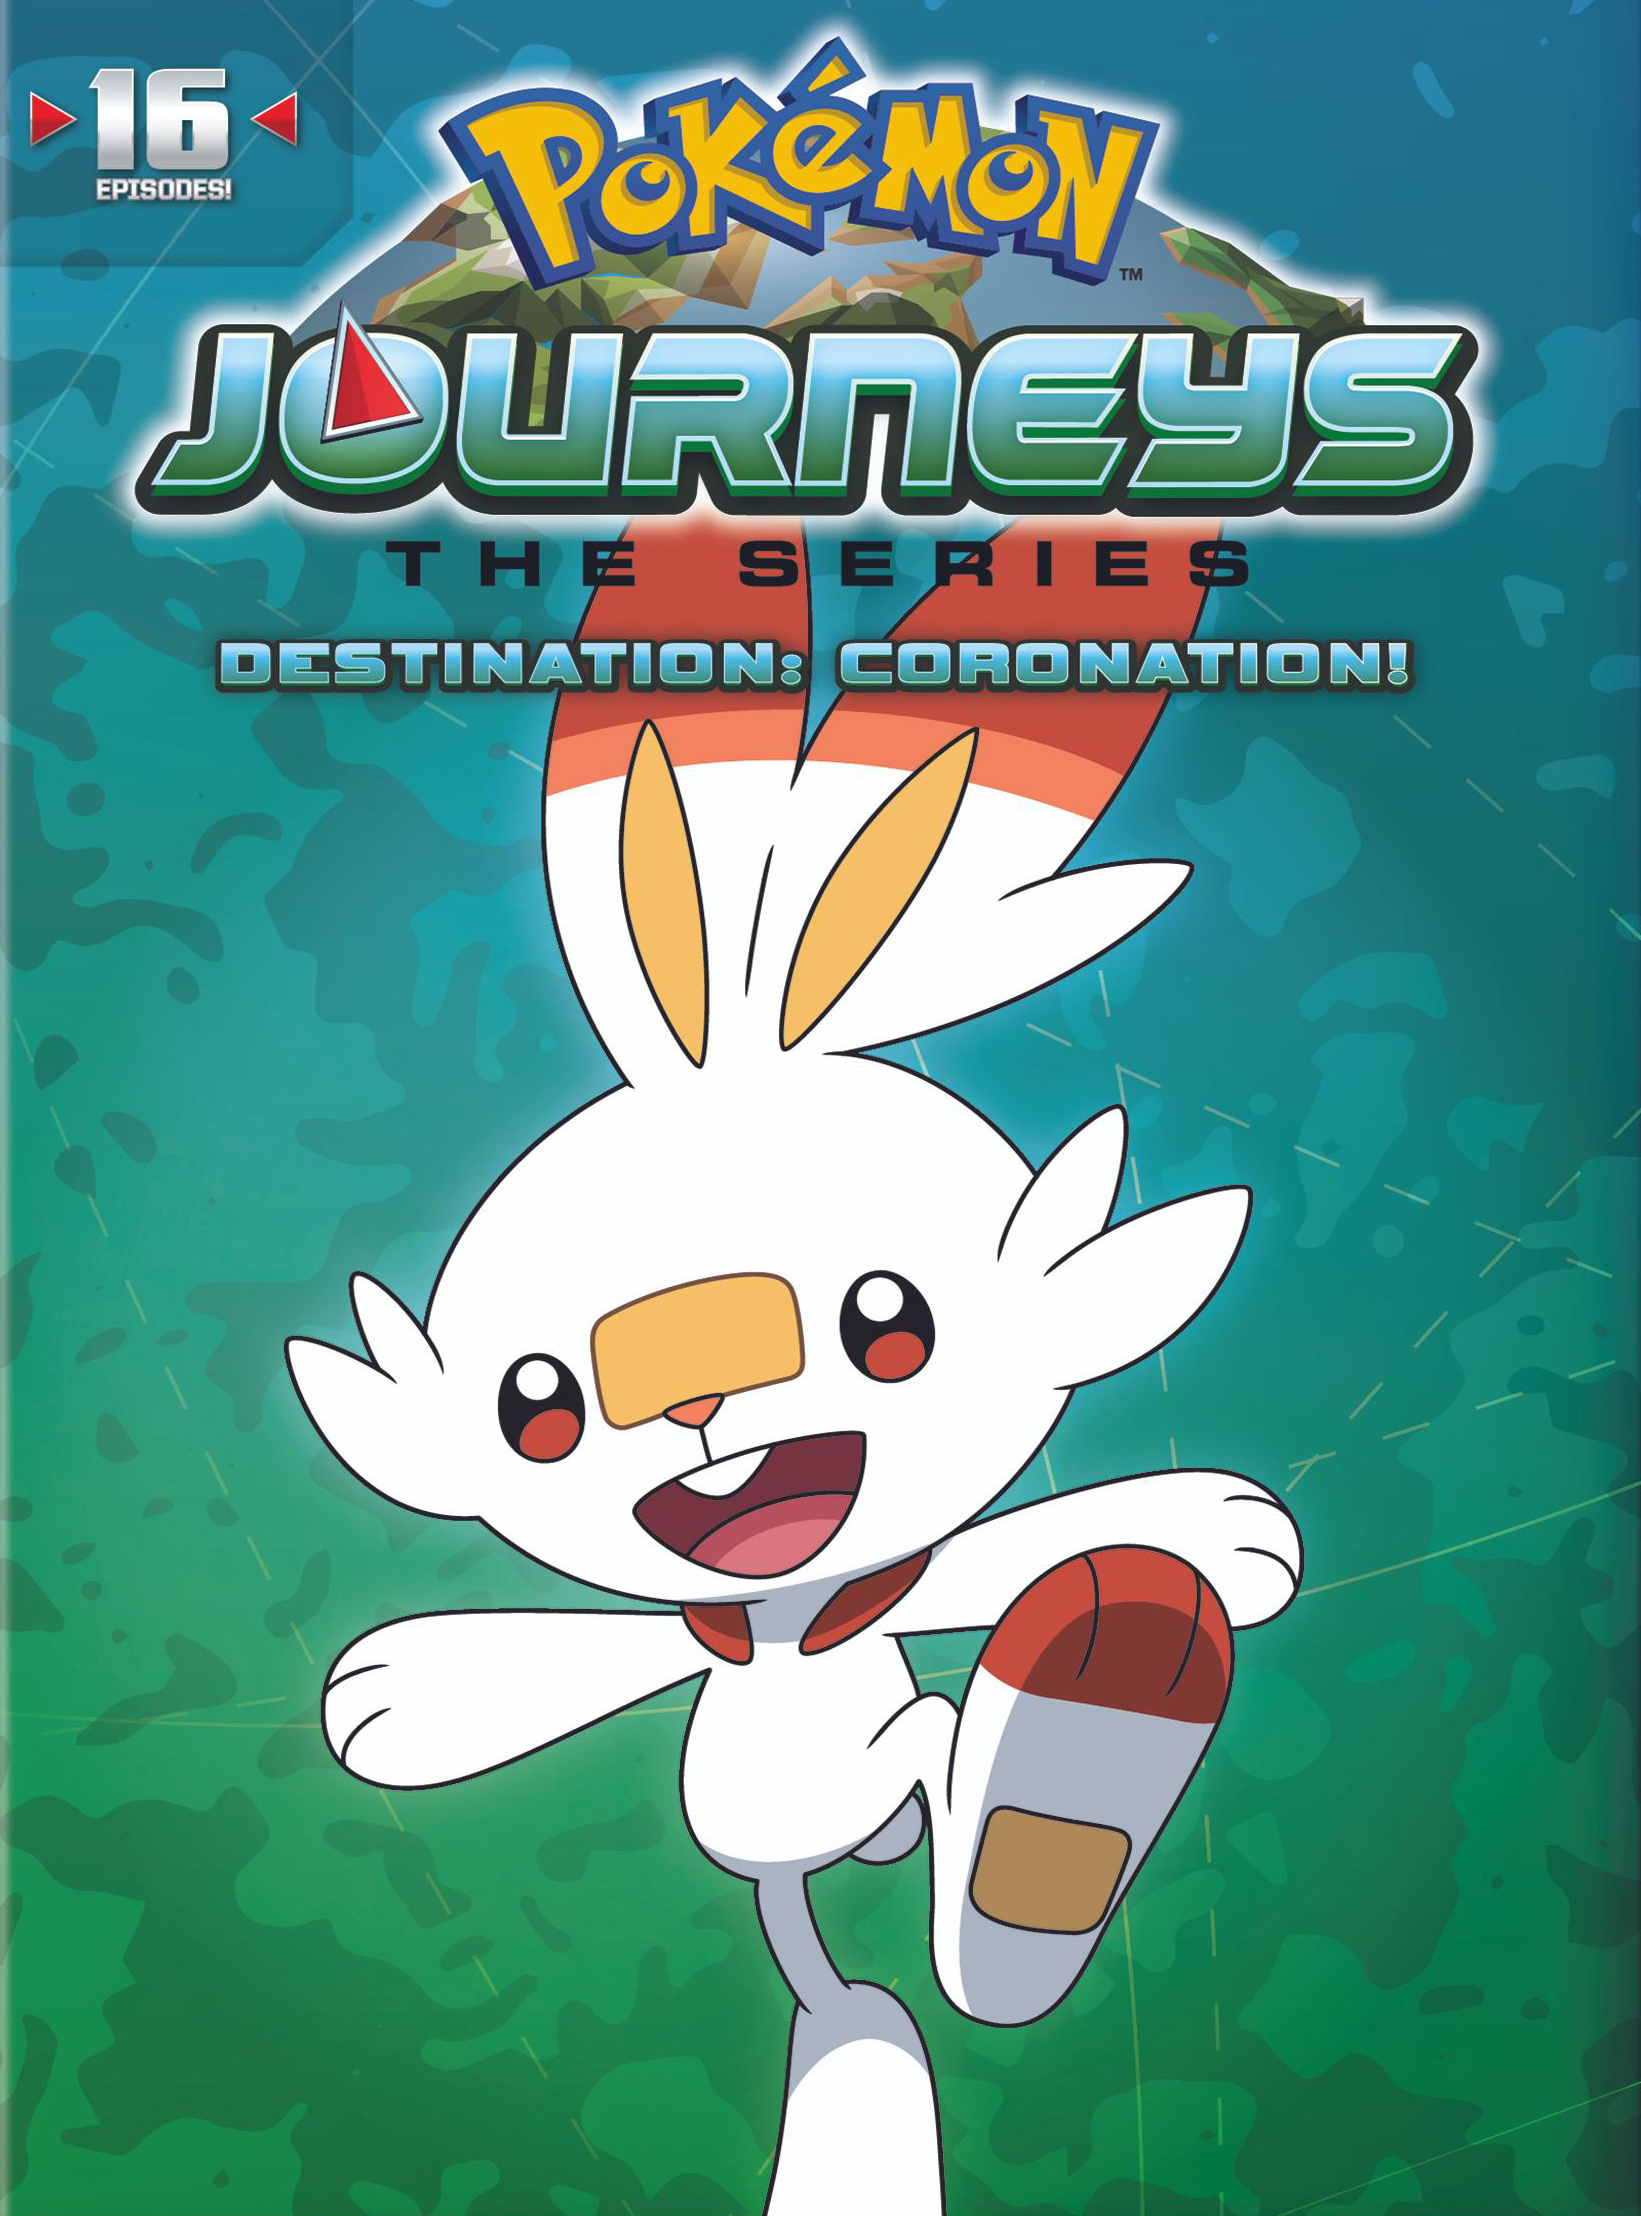 Pokémon Journeys: The Series